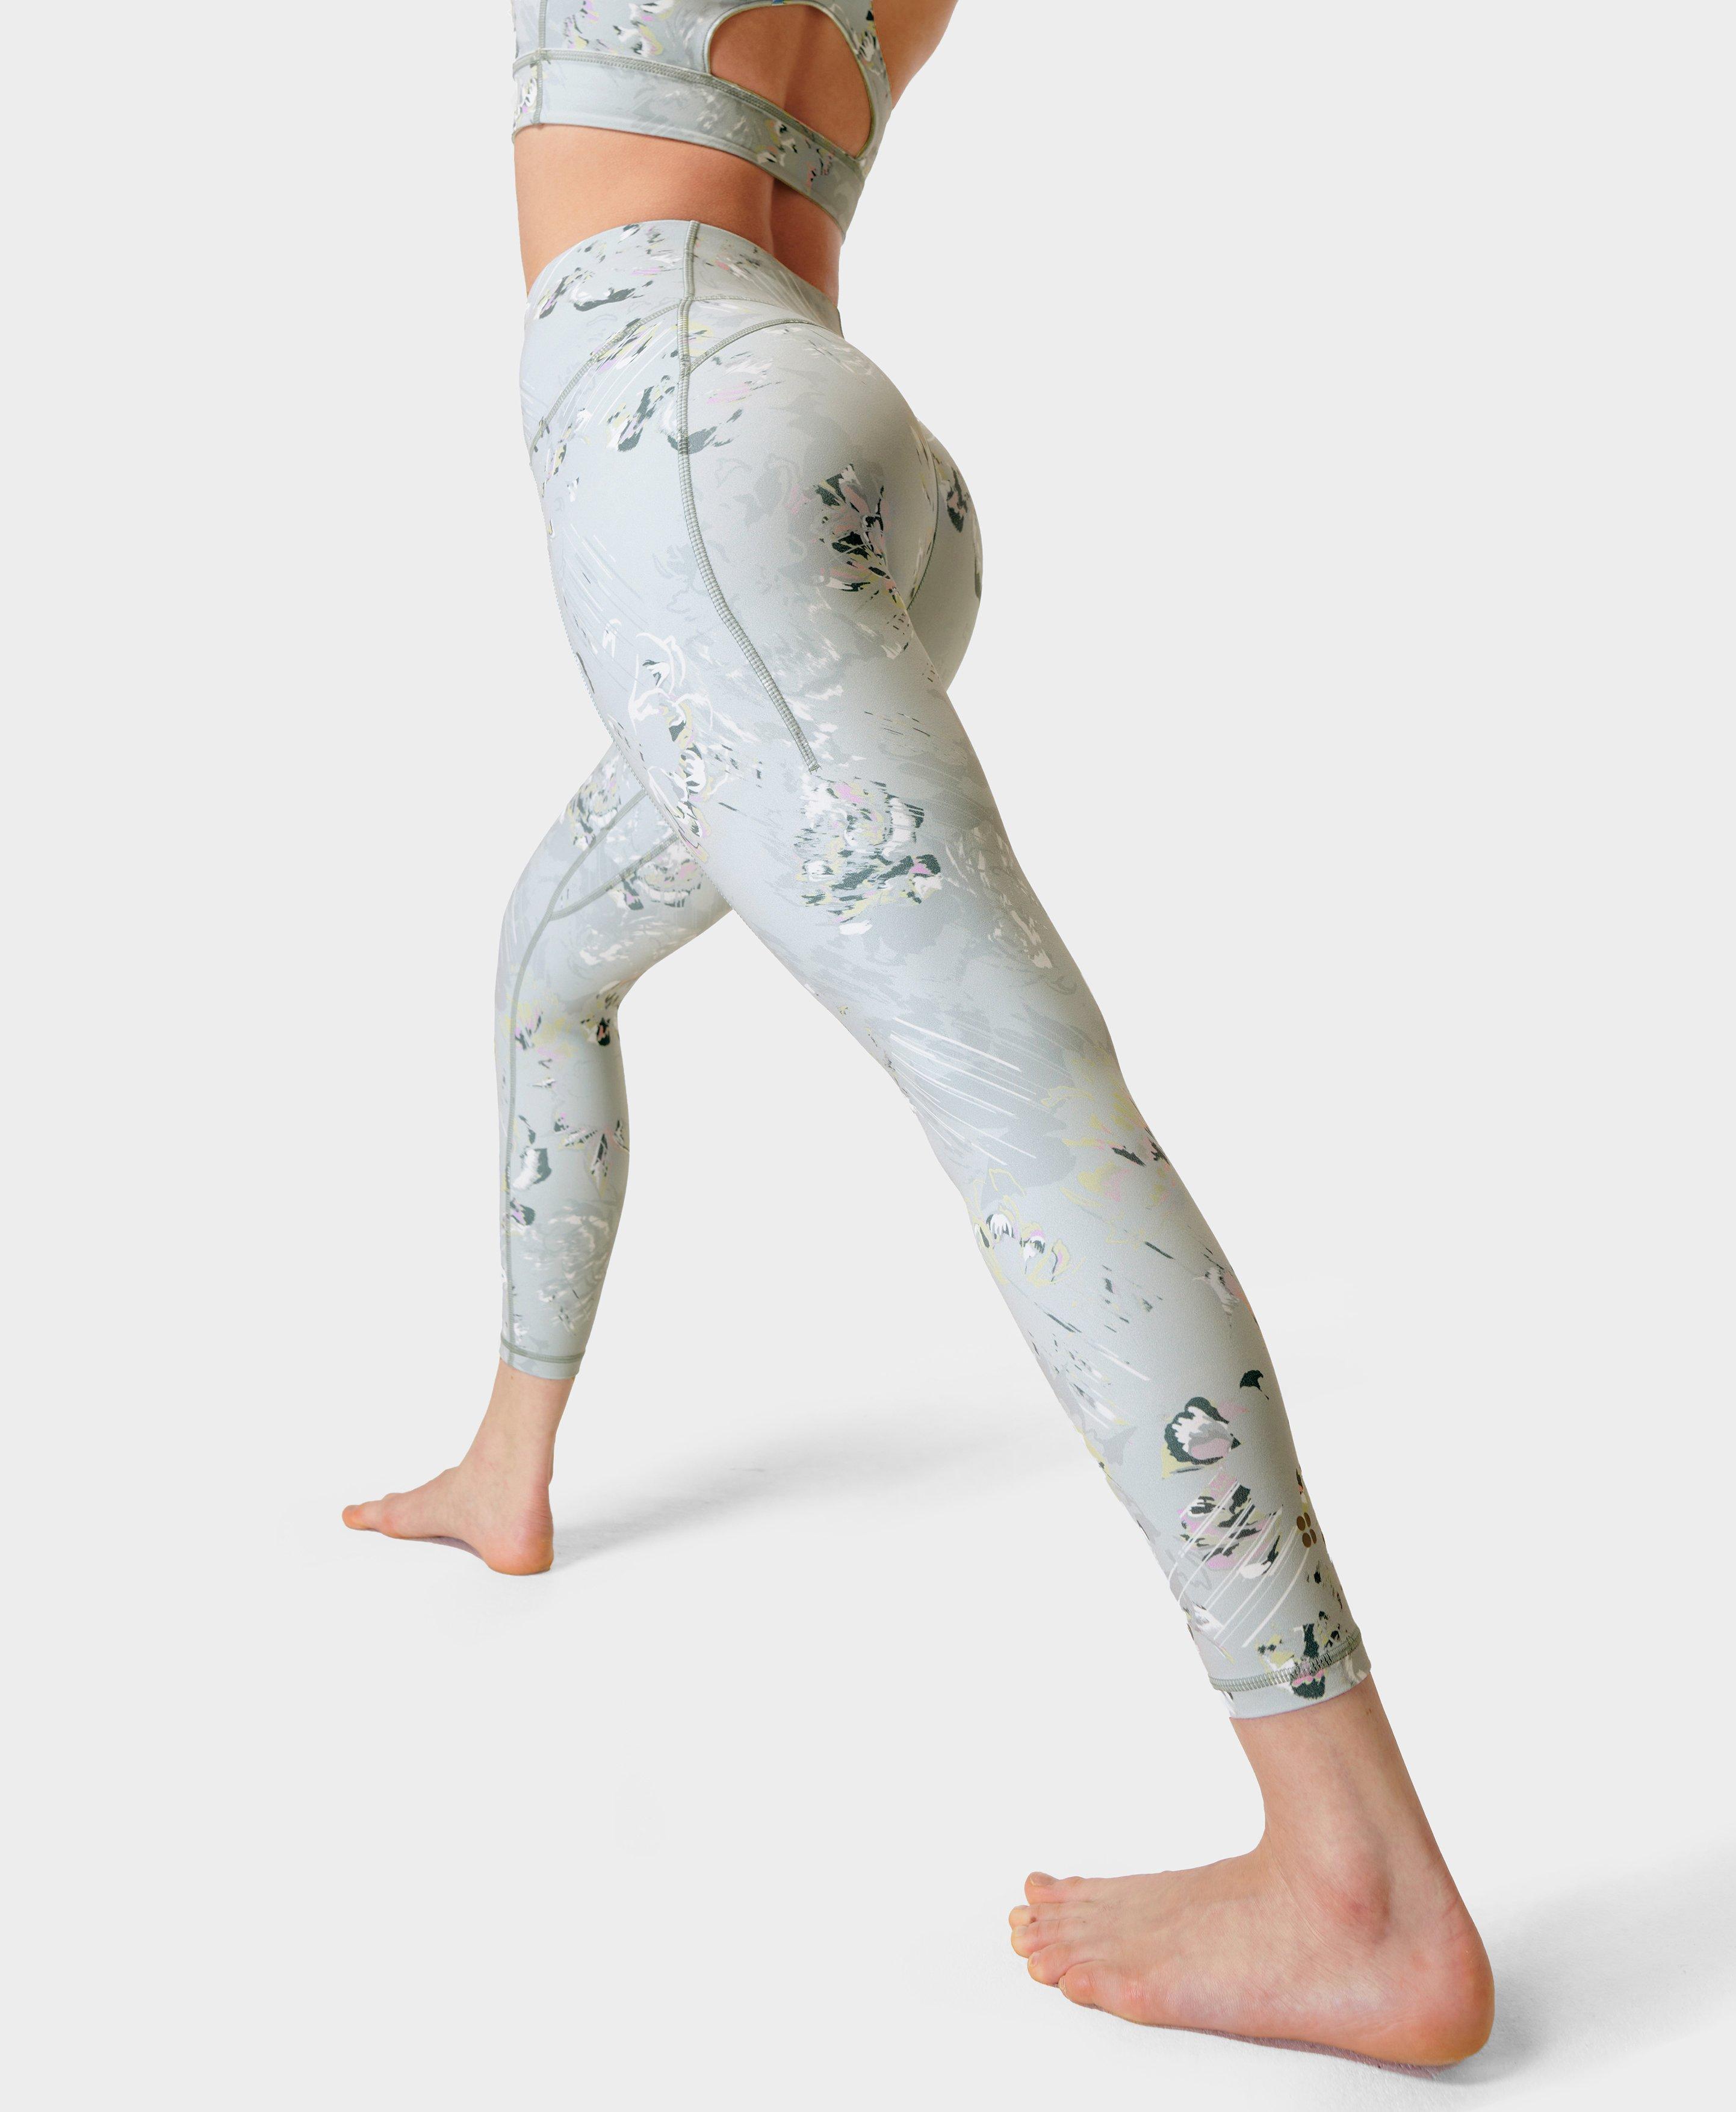  Fubido Women's Yoga Pants,Leggings,Easter Eggs